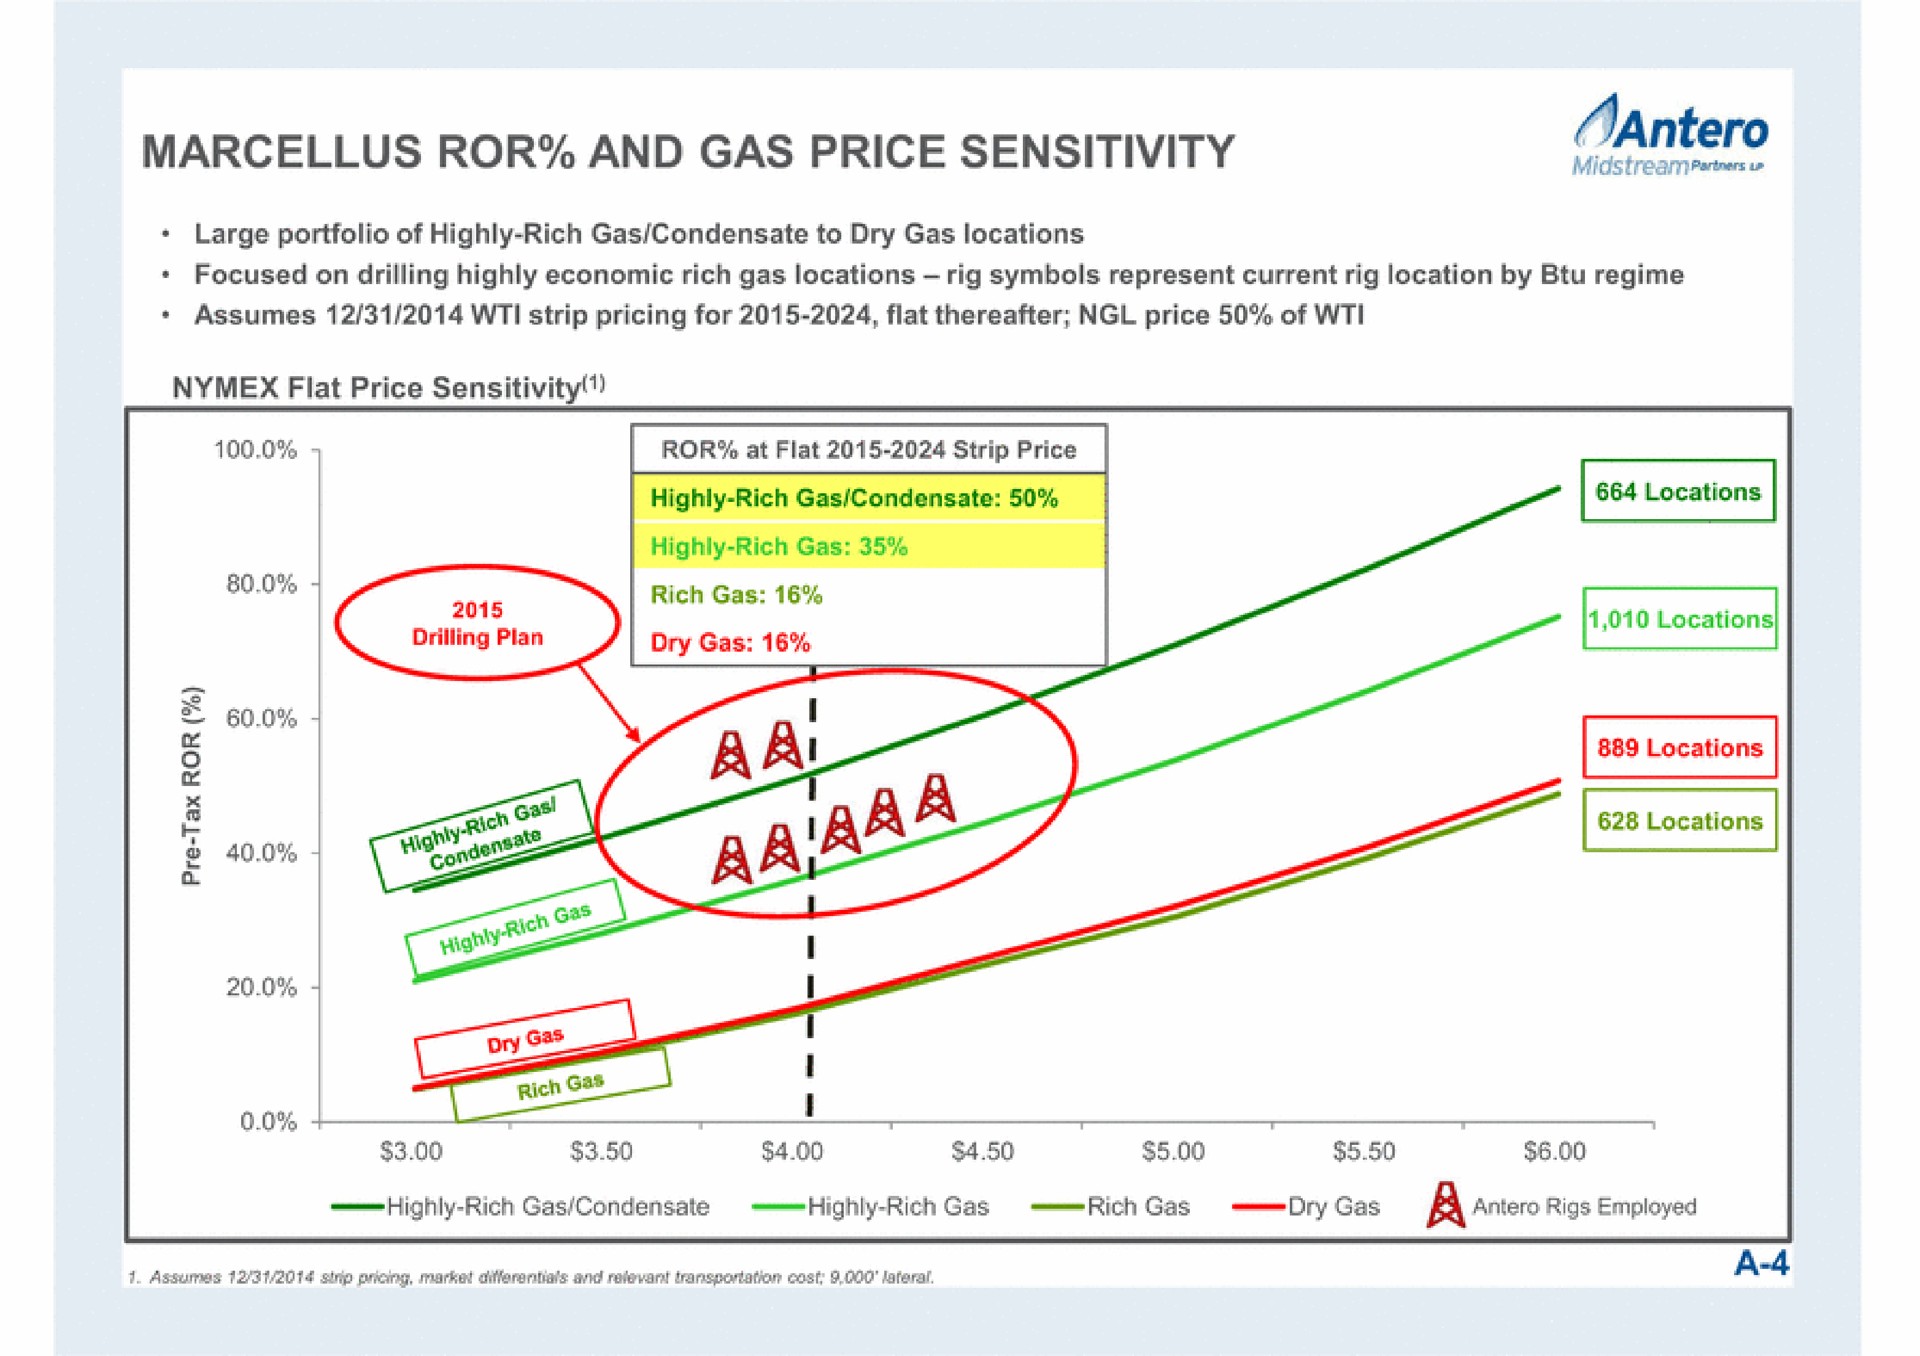 and gas price sensitivity | Antero Midstream Partners